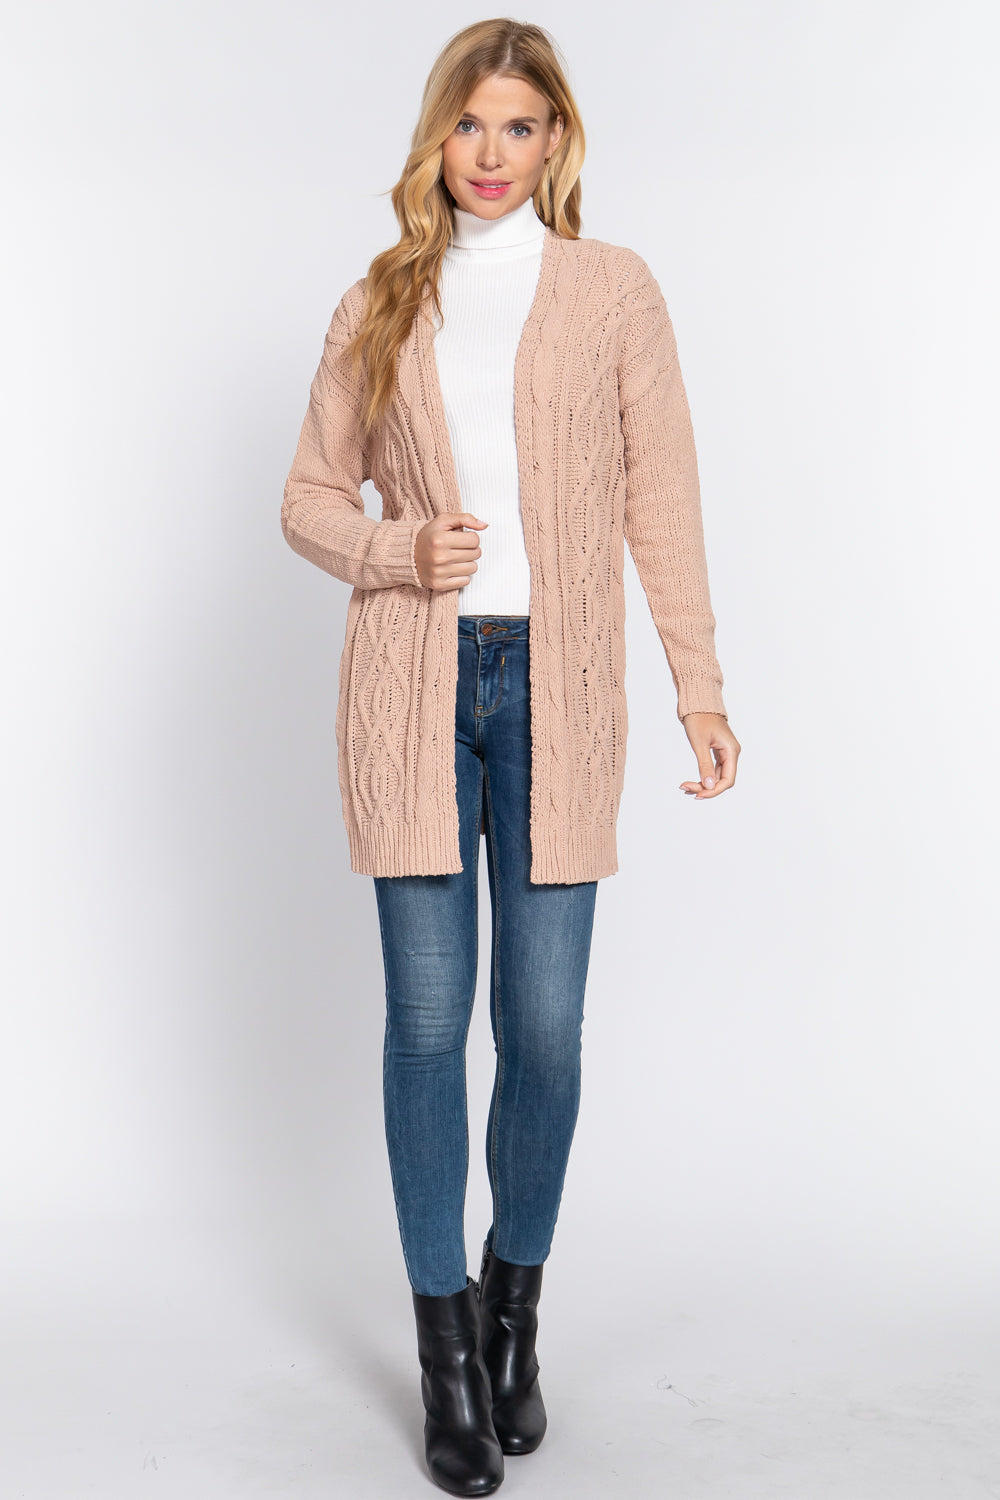 Chenille Sweater Cardigan Sunny EvE Fashion